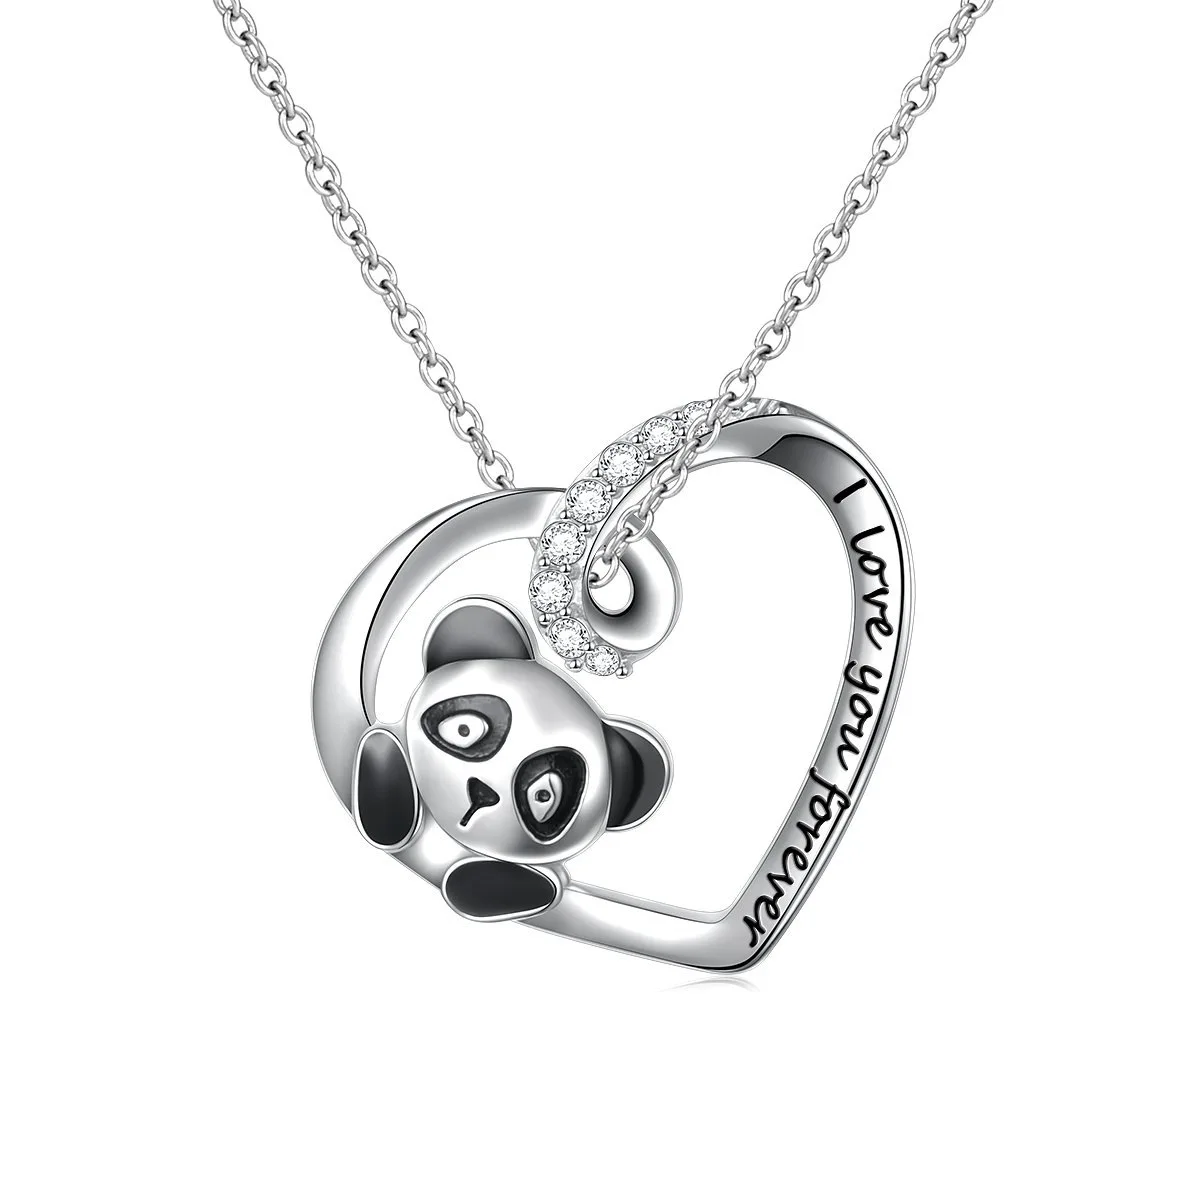 Panda Heart Necklace 